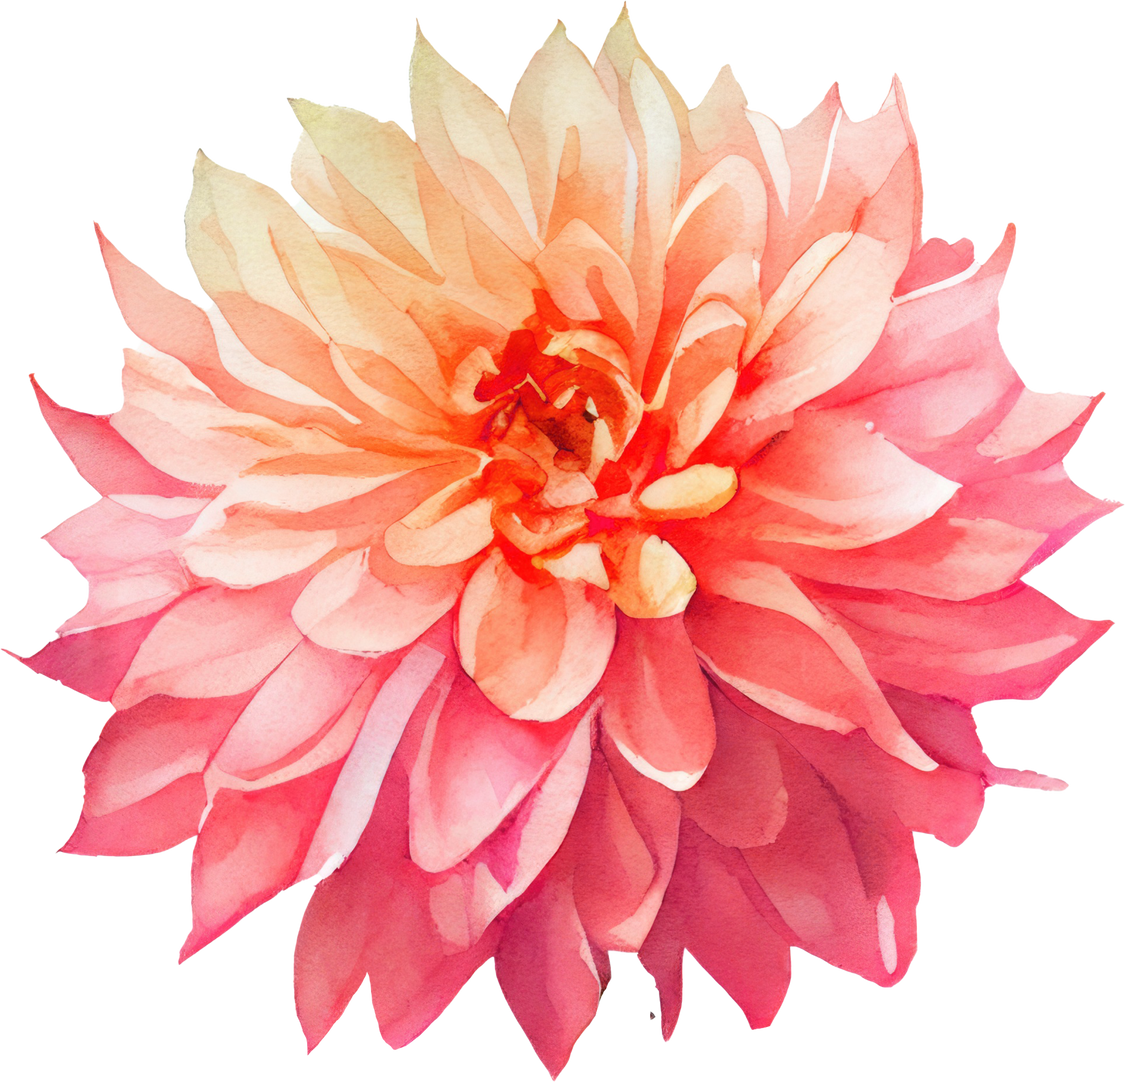 Pink Dahlia flower Watercolor